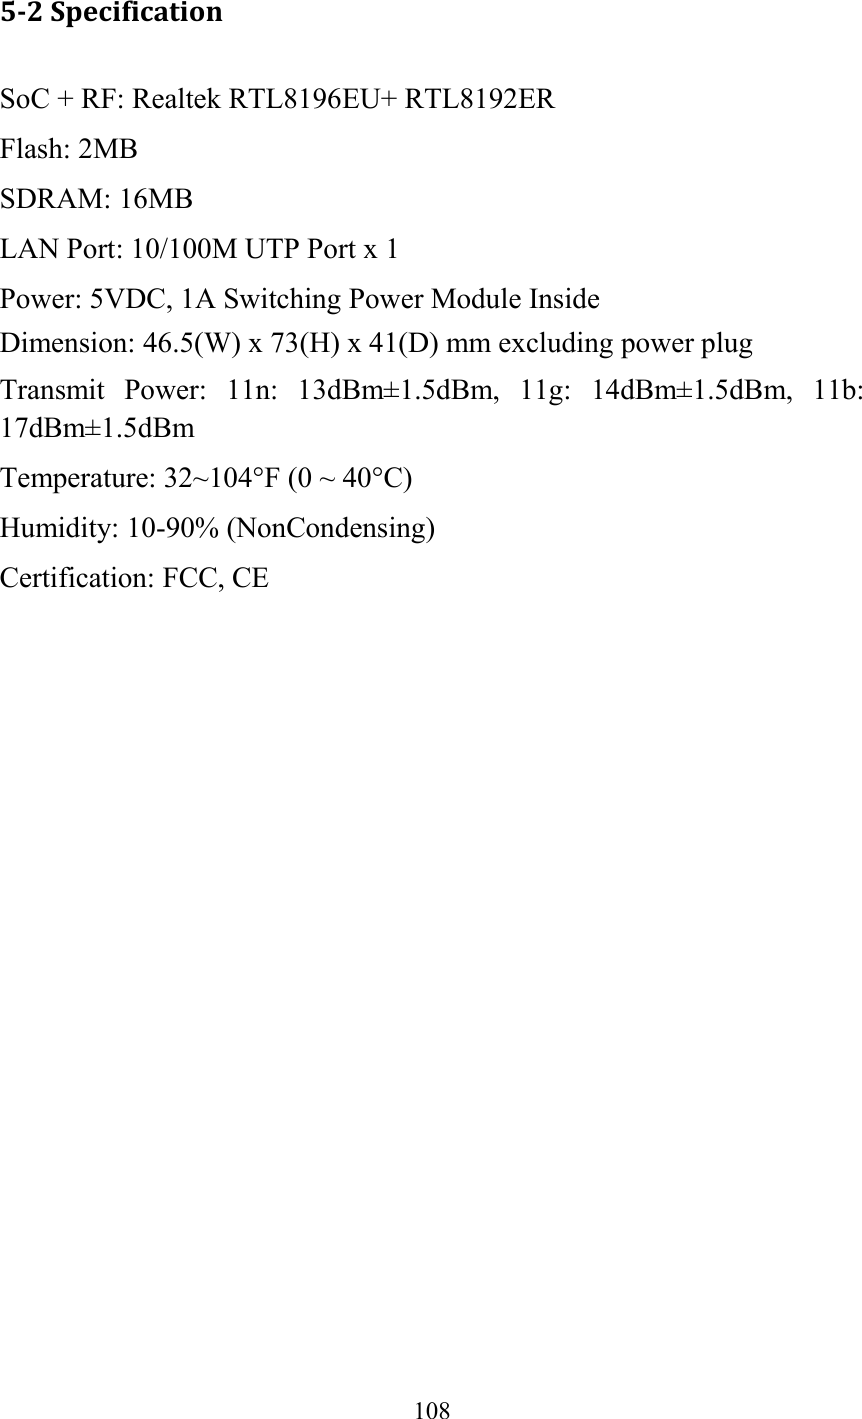  108  5-2 Specification SoC + RF: Realtek RTL8196EU+ RTL8192ER Flash: 2MB   SDRAM: 16MB   LAN Port: 10/100M UTP Port x 1 Power: 5VDC, 1A Switching Power Module Inside Dimension: 46.5(W) x 73(H) x 41(D) mm excluding power plug Transmit  Power:  11n:  13dBm±1.5dBm,  11g:  14dBm±1.5dBm,  11b: 17dBm±1.5dBm   Temperature: 32~104°F (0 ~ 40°C) Humidity: 10-90% (NonCondensing) Certification: FCC, CE   